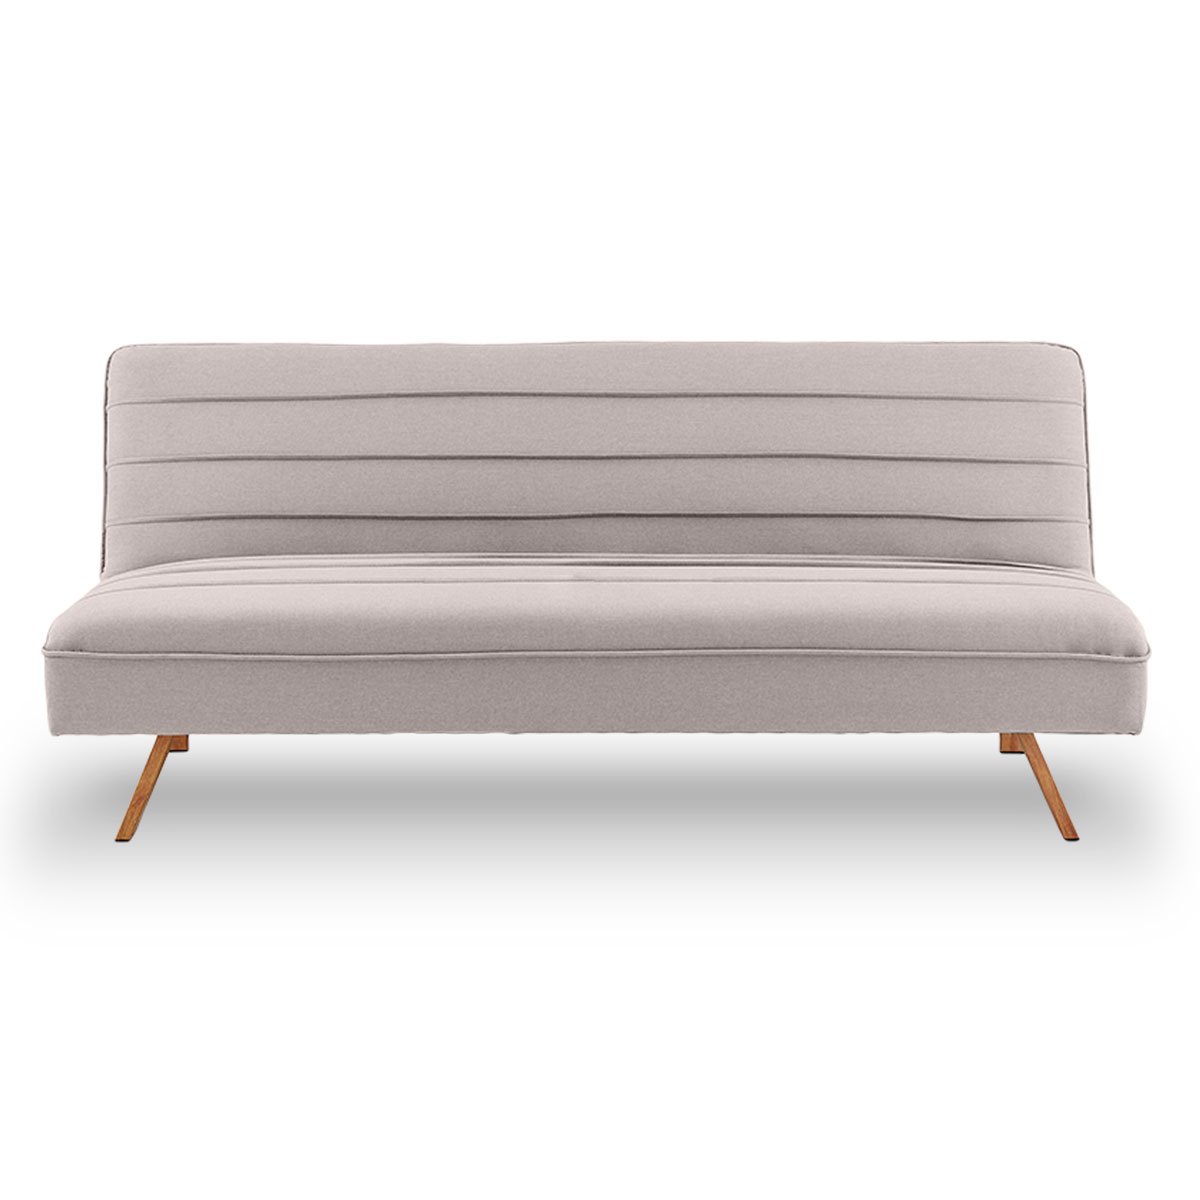 Sarantino 3 Seater Modular Linen Fabric Sofa Bed Couch Futon - Beige 2